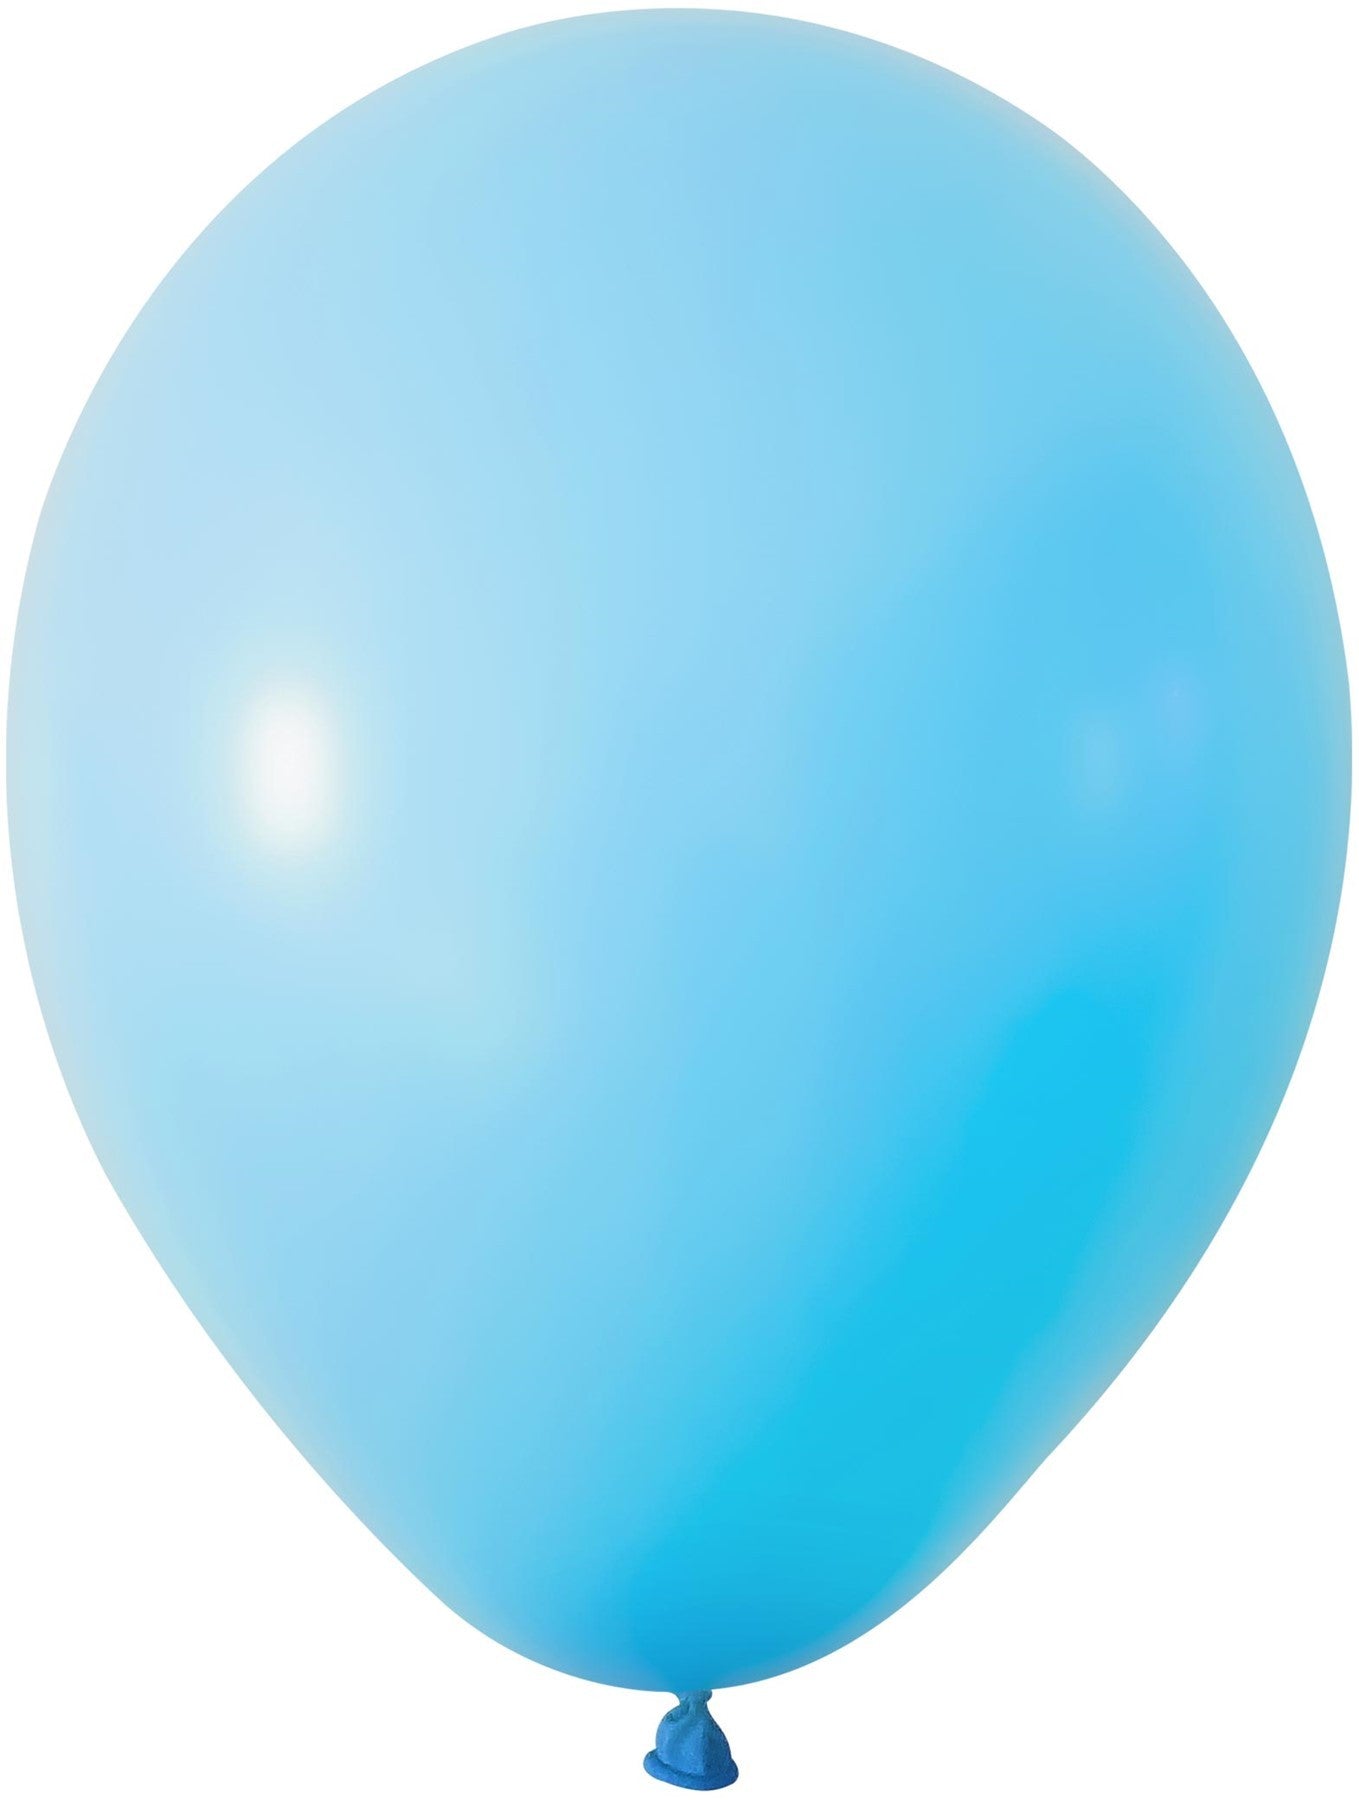 View Light Blue Latex Balloon 12 inch Pk 100 information